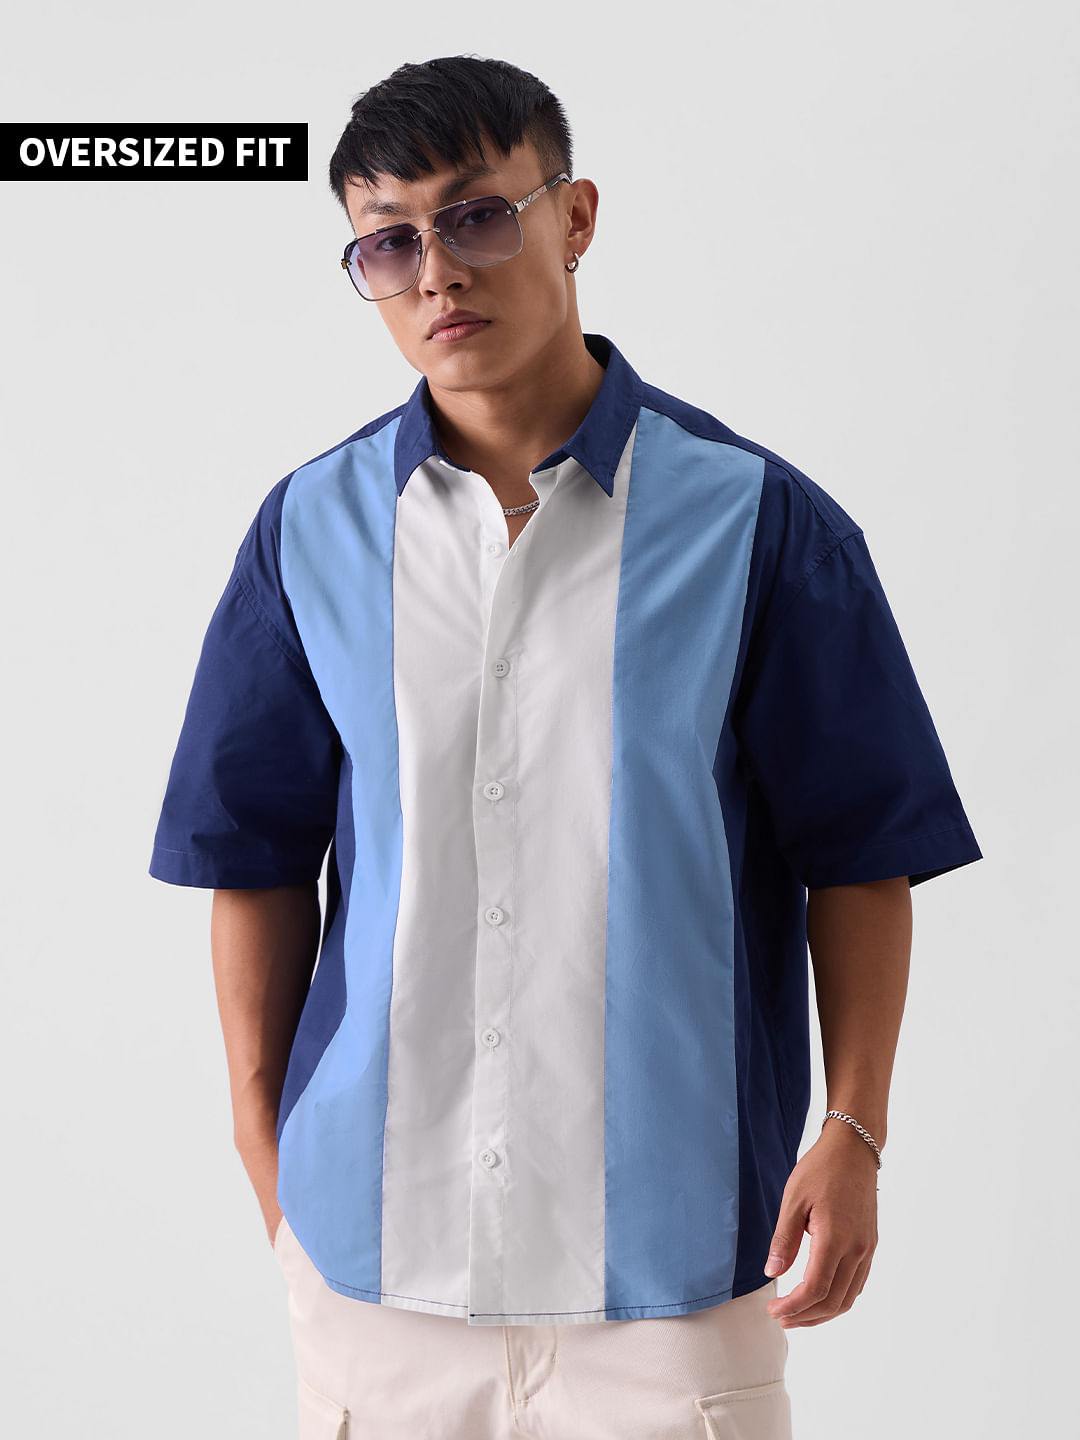 Buy Solids: Blue, White (Colourblock) Oversized Shirt Online